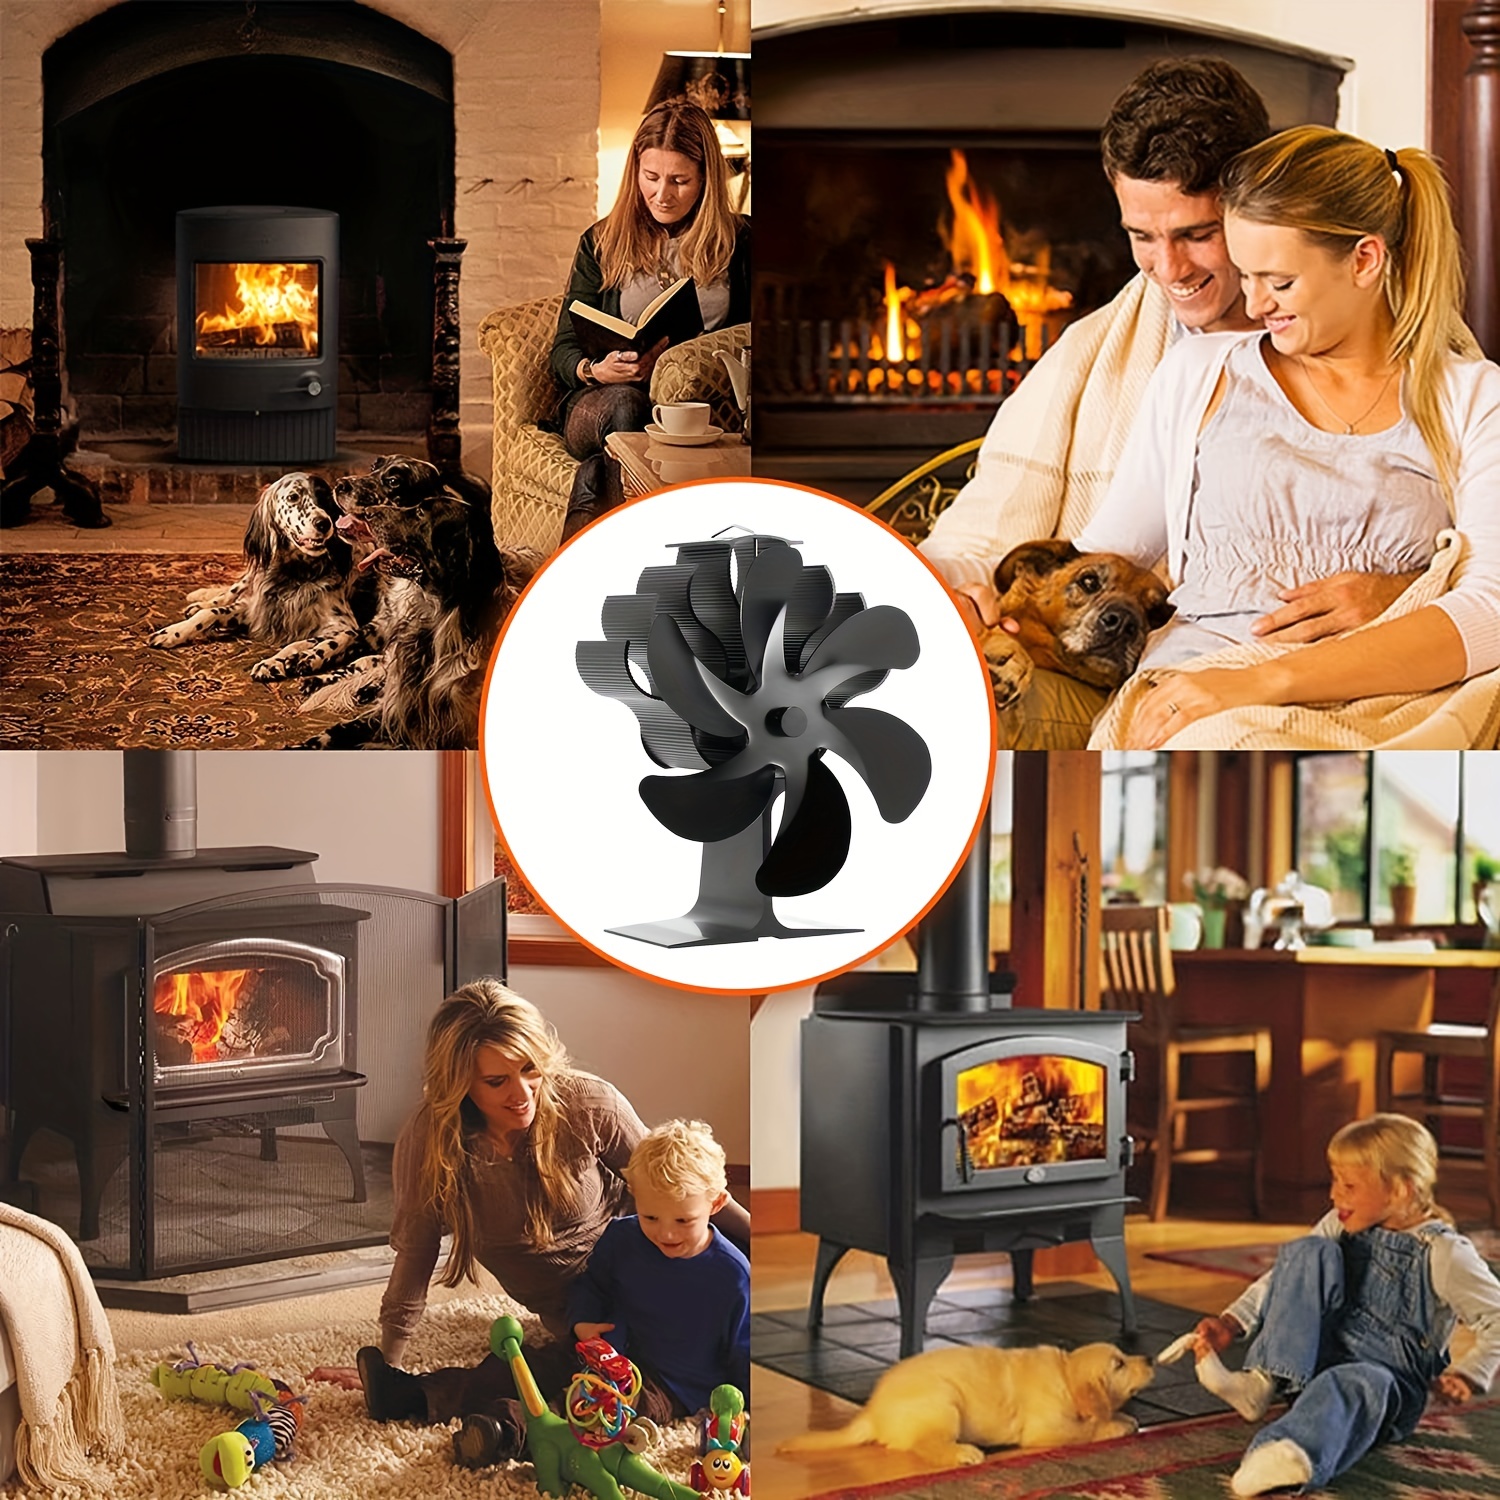 Wood Stove Fan, Fireplace Fan, Heat Powered Stove, Non Electric for Log  Burner/Burning/Wood Burner Stove, Quiet Motor, Circulating Warm Air Saving  Fan 